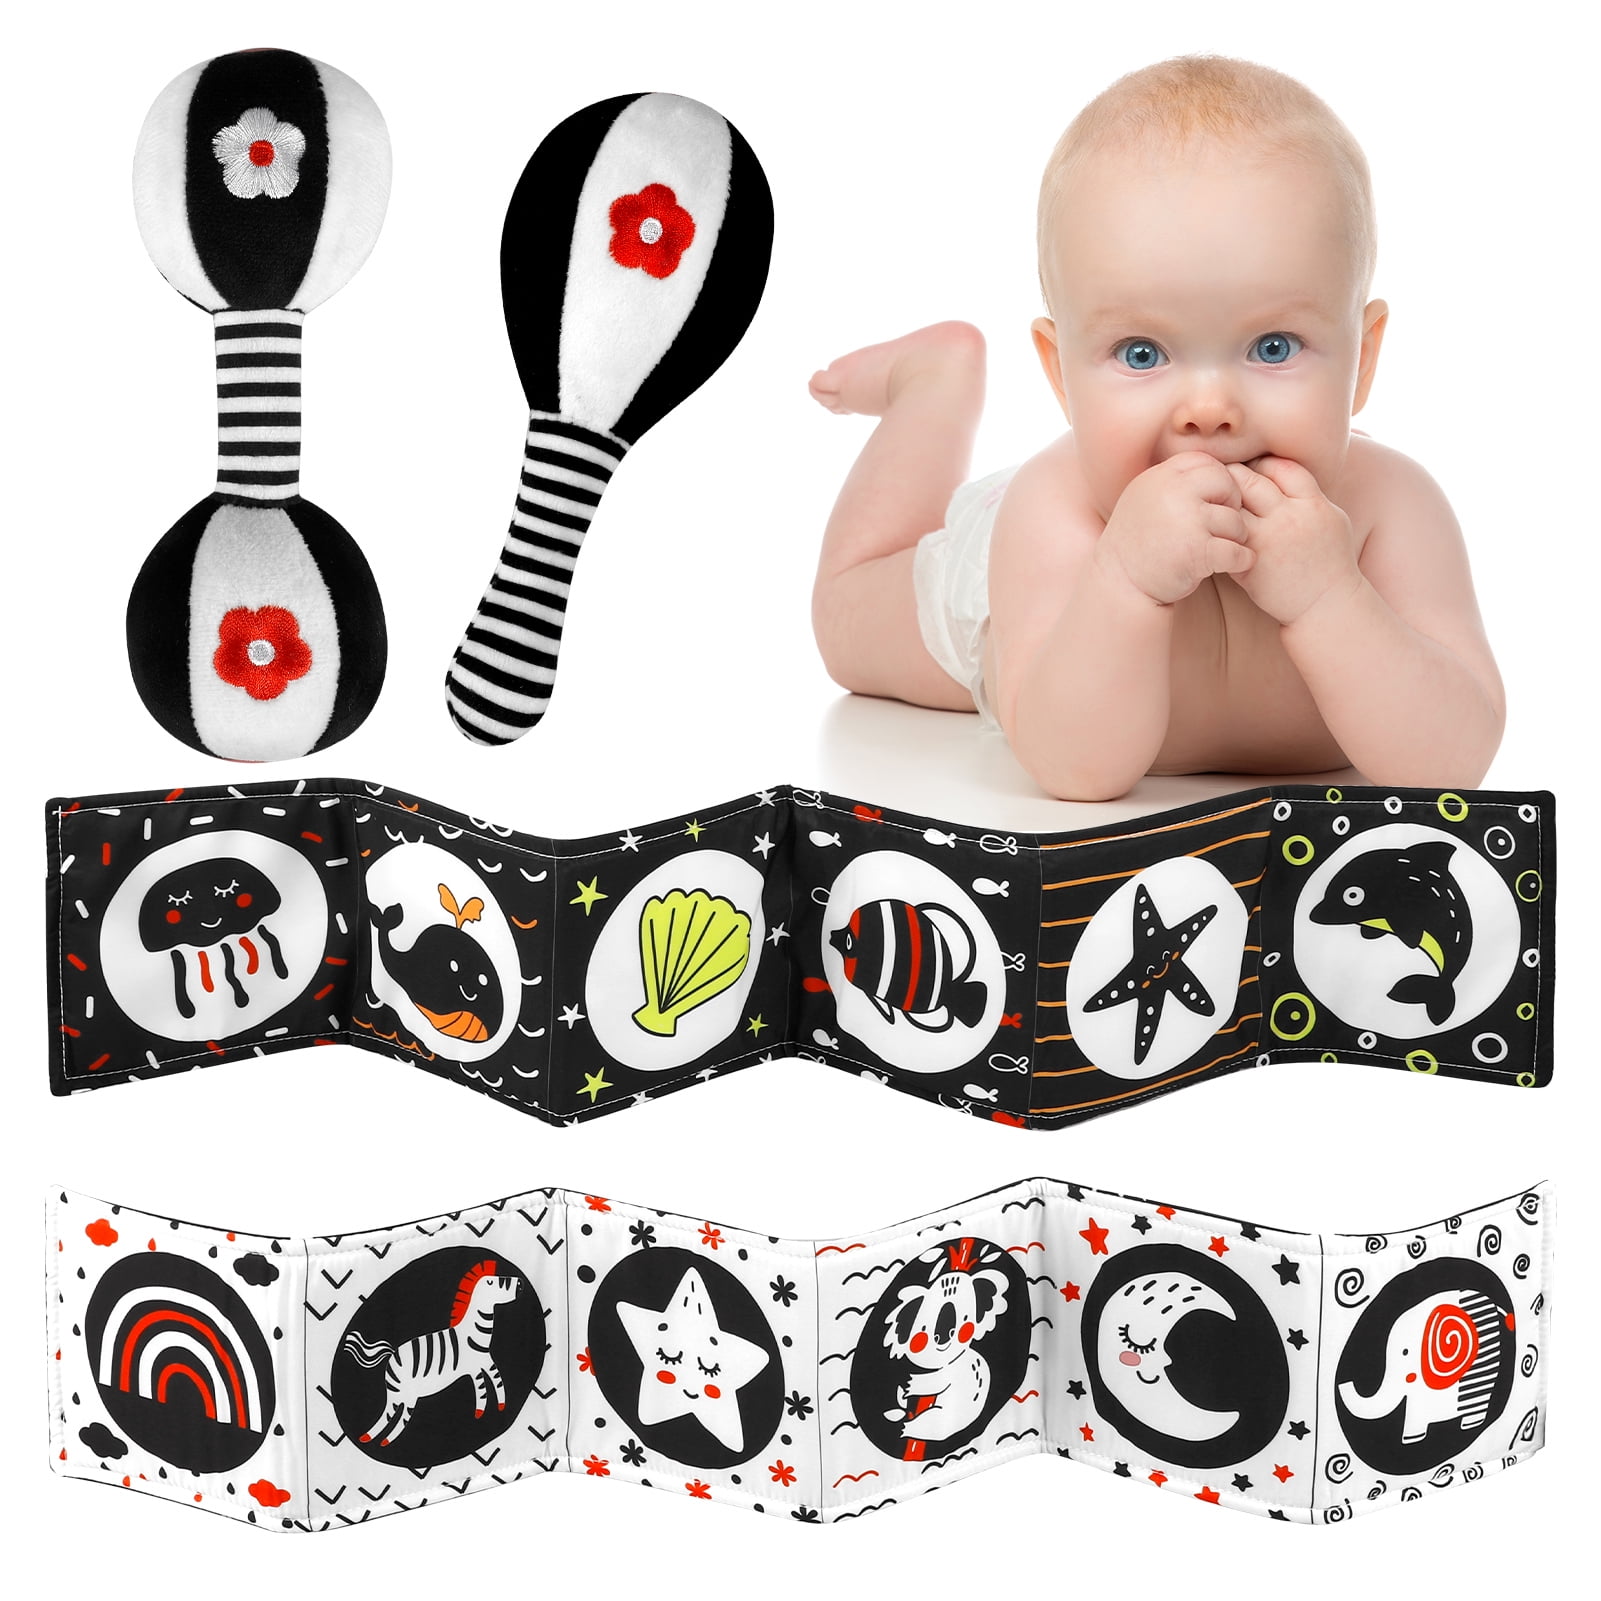 Black & White Sensory Bin for Babies 